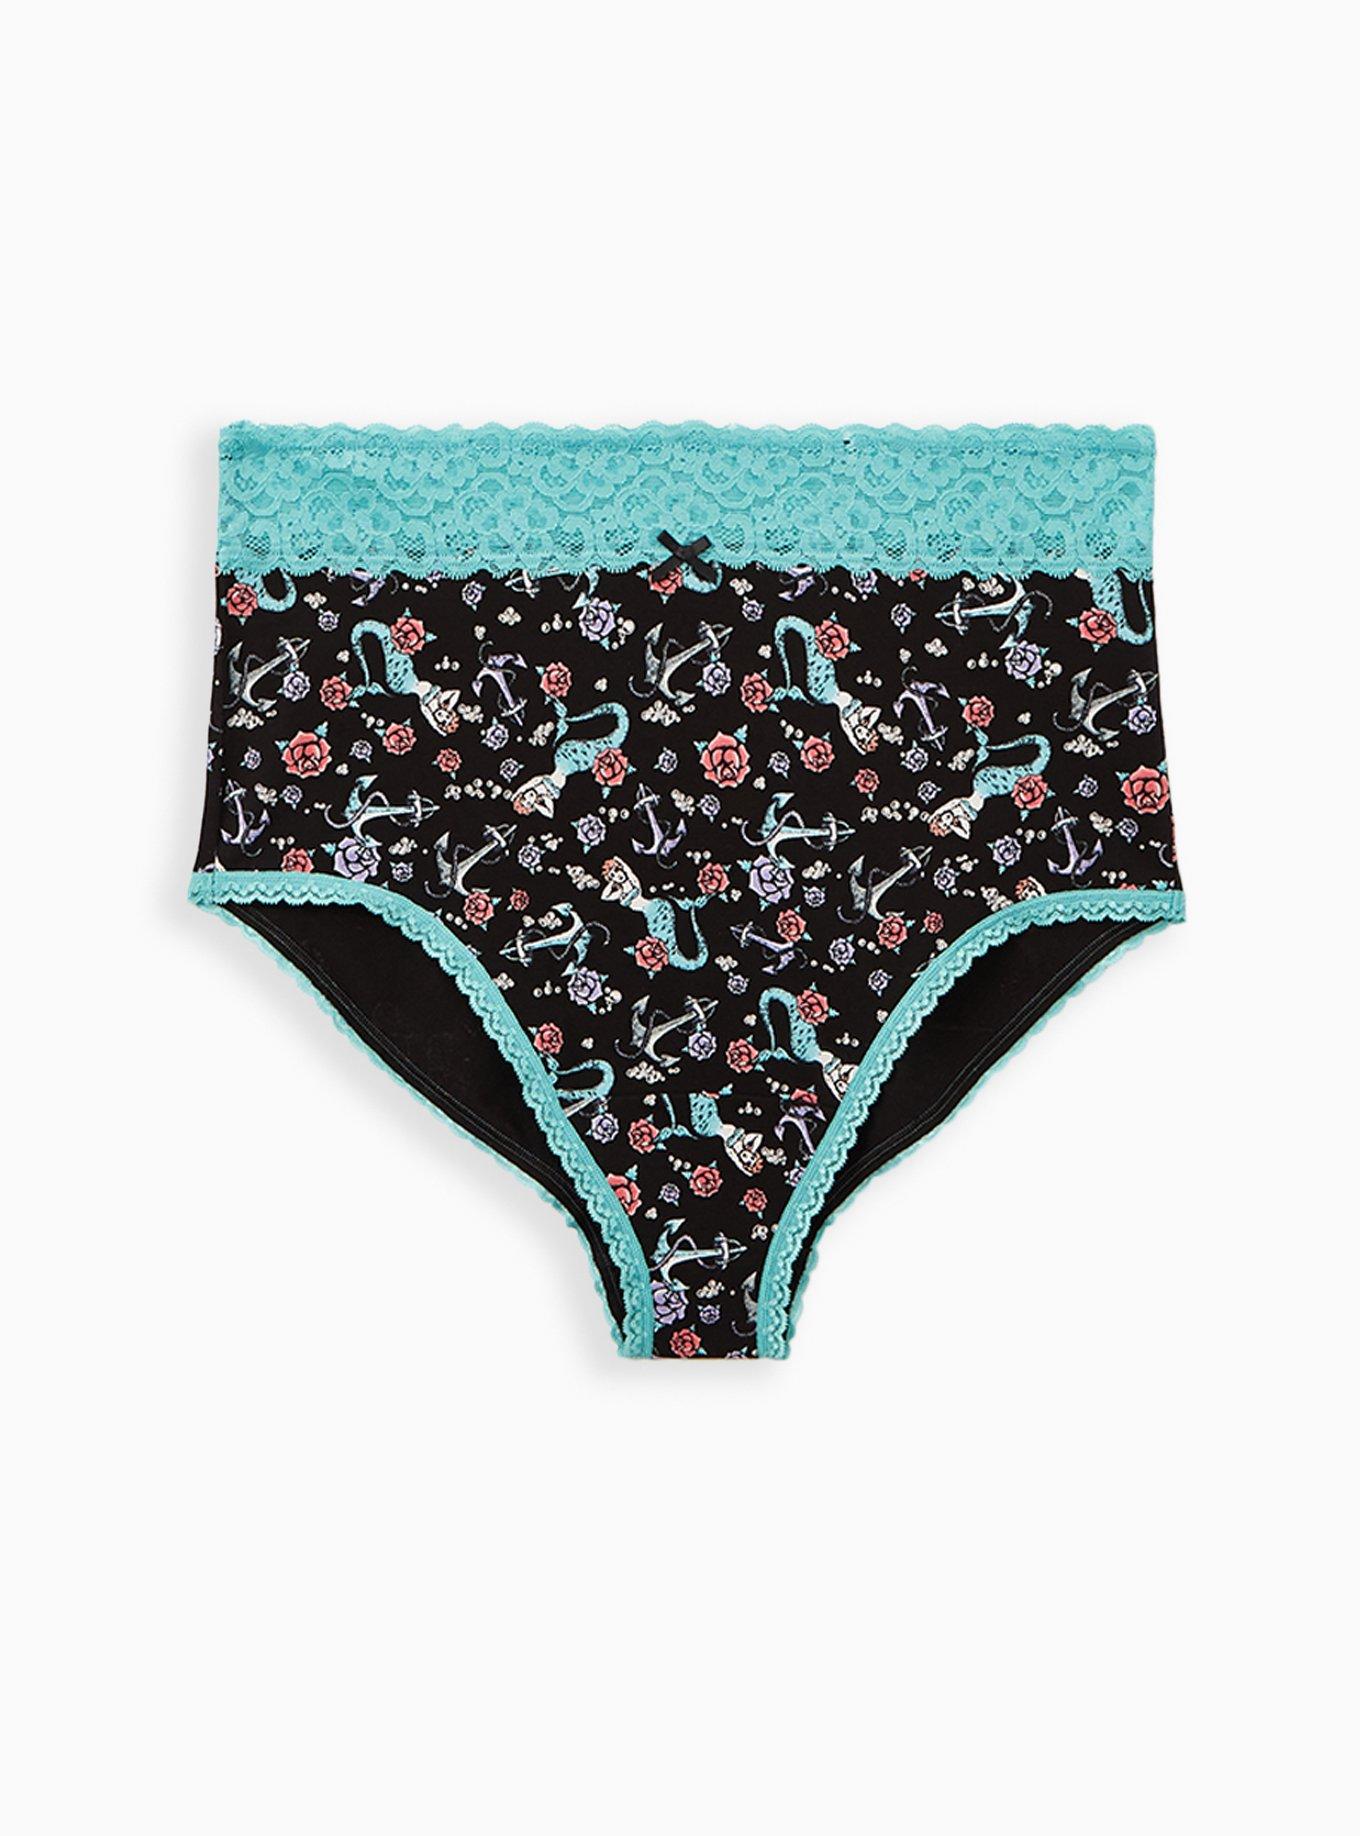 Plus Size - Mermaid Floral Wide Lace Cotton High Waist Panty - Torrid